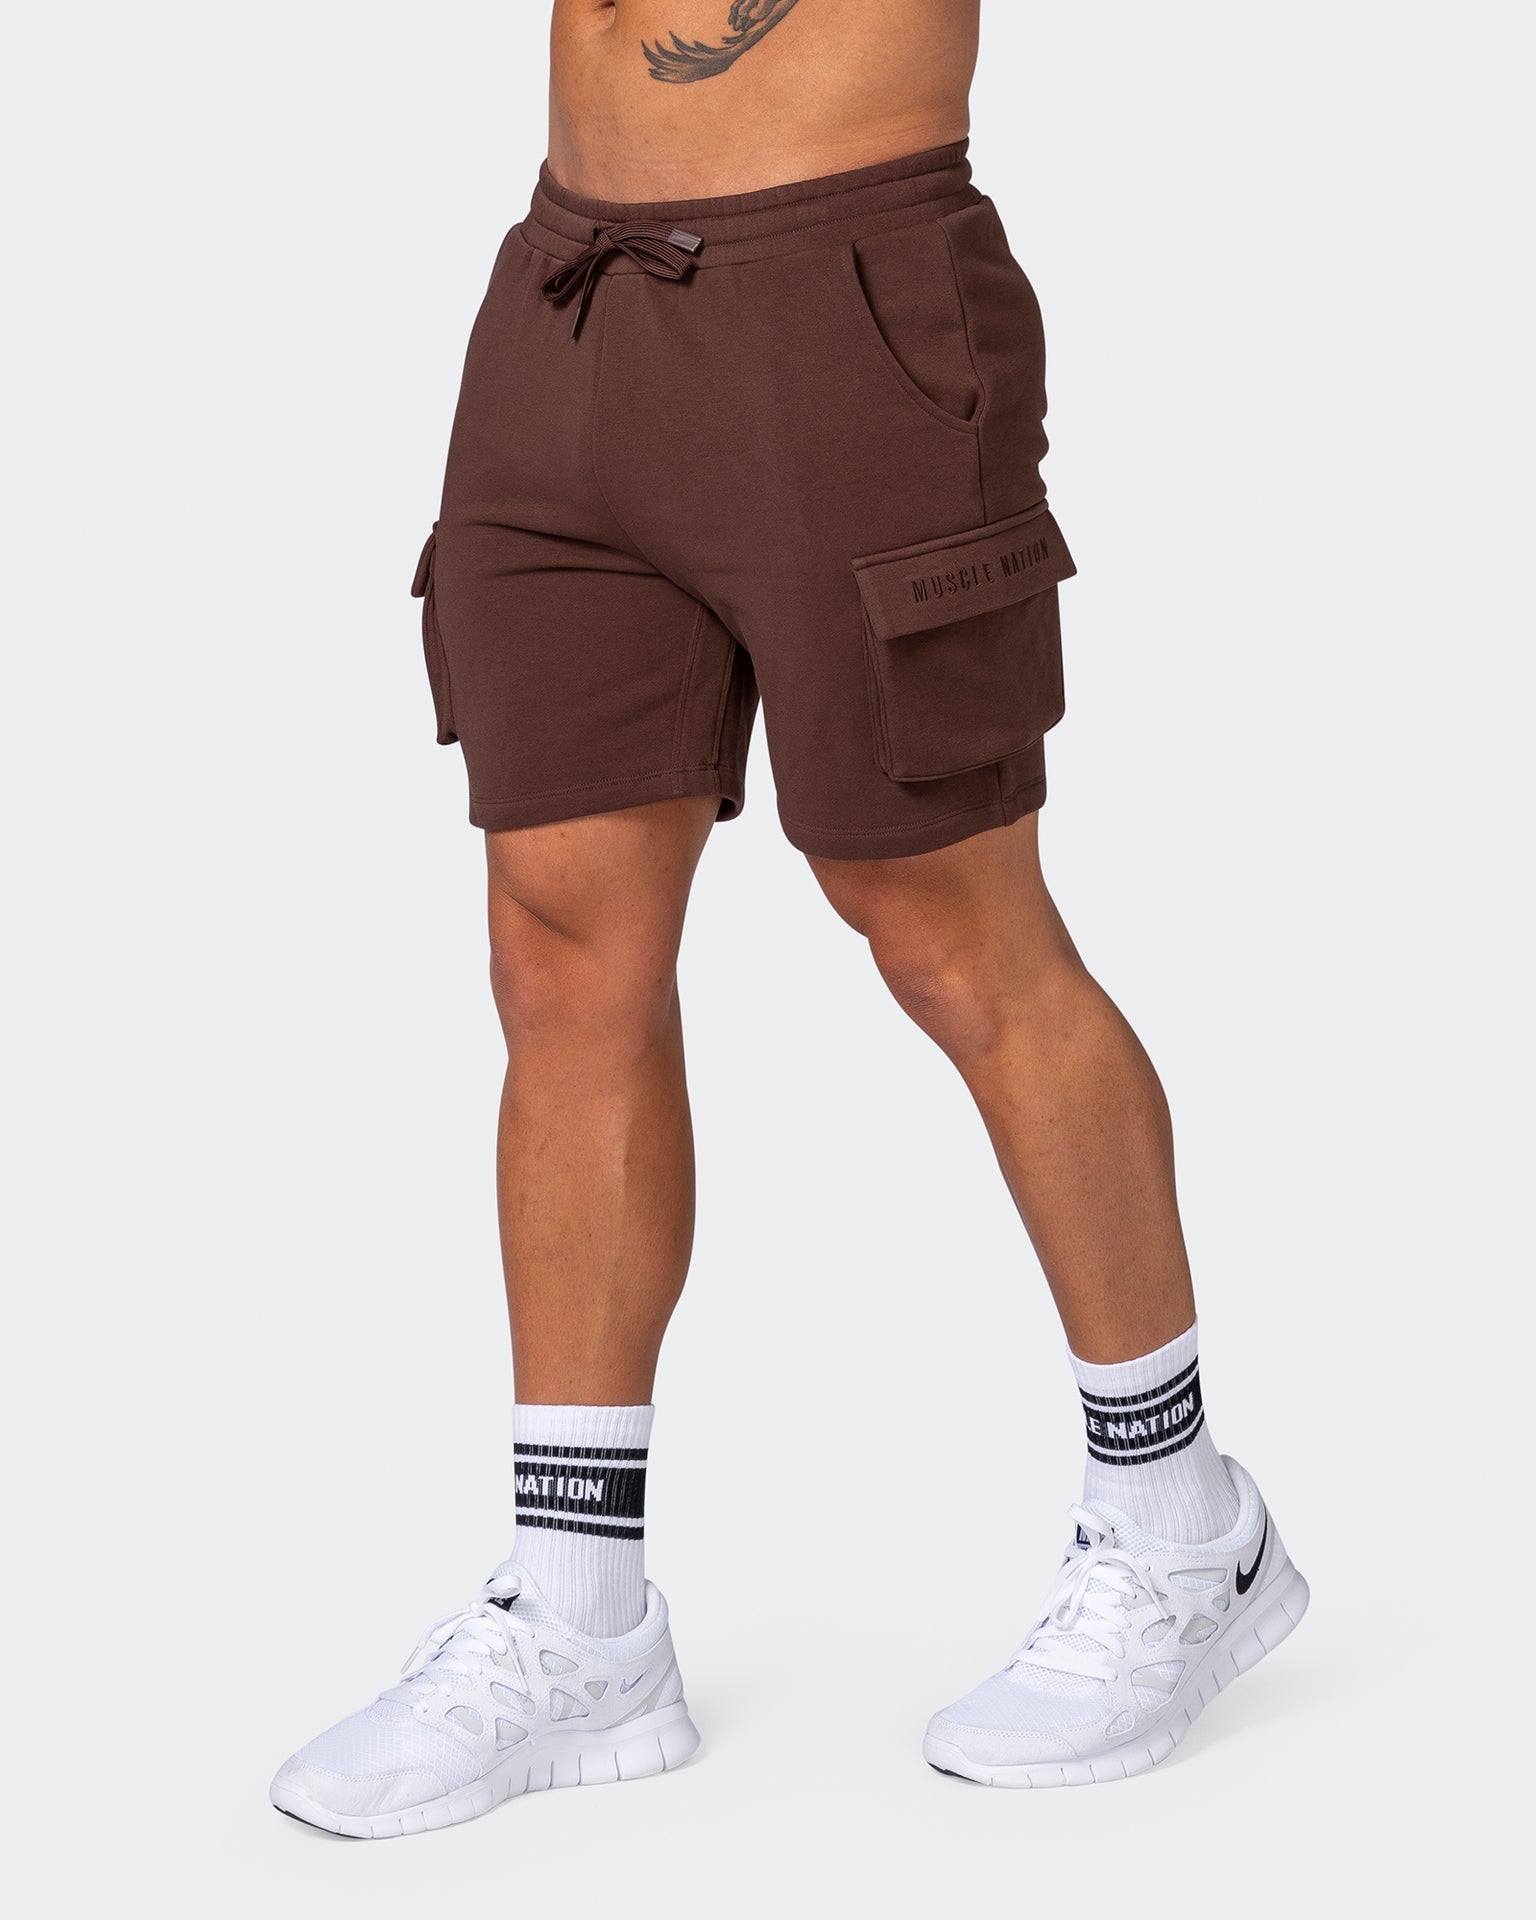 musclenation Activewear Cargo Shorts - Coffee